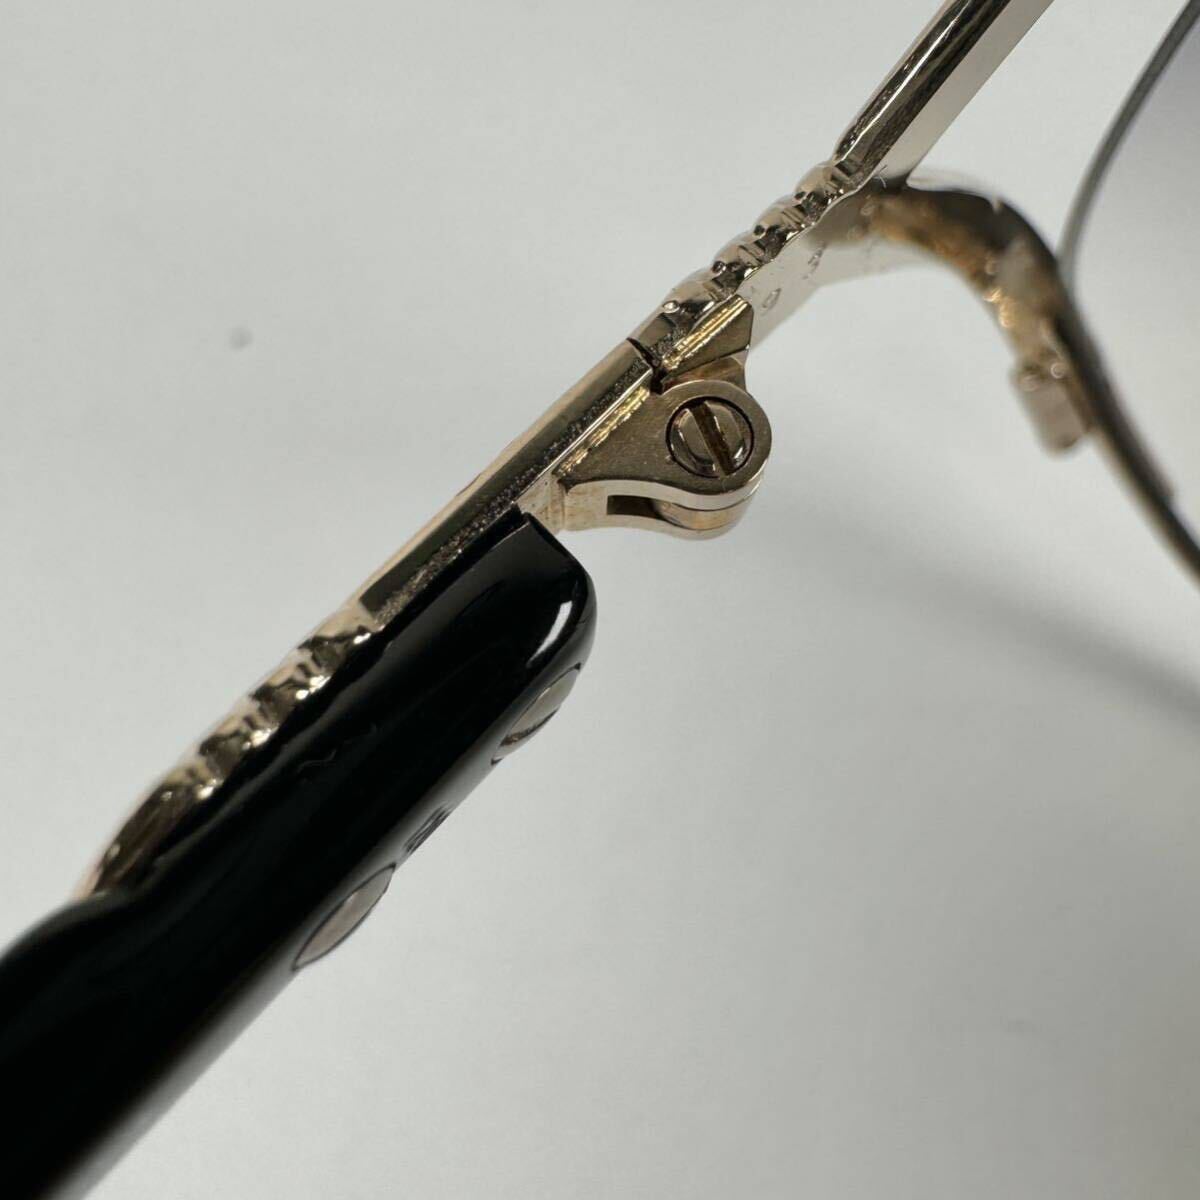 Christian Dior Christian Dior z11 солнцезащитные очки очки Австралия производства optyl 2250 80 годы Vintage H